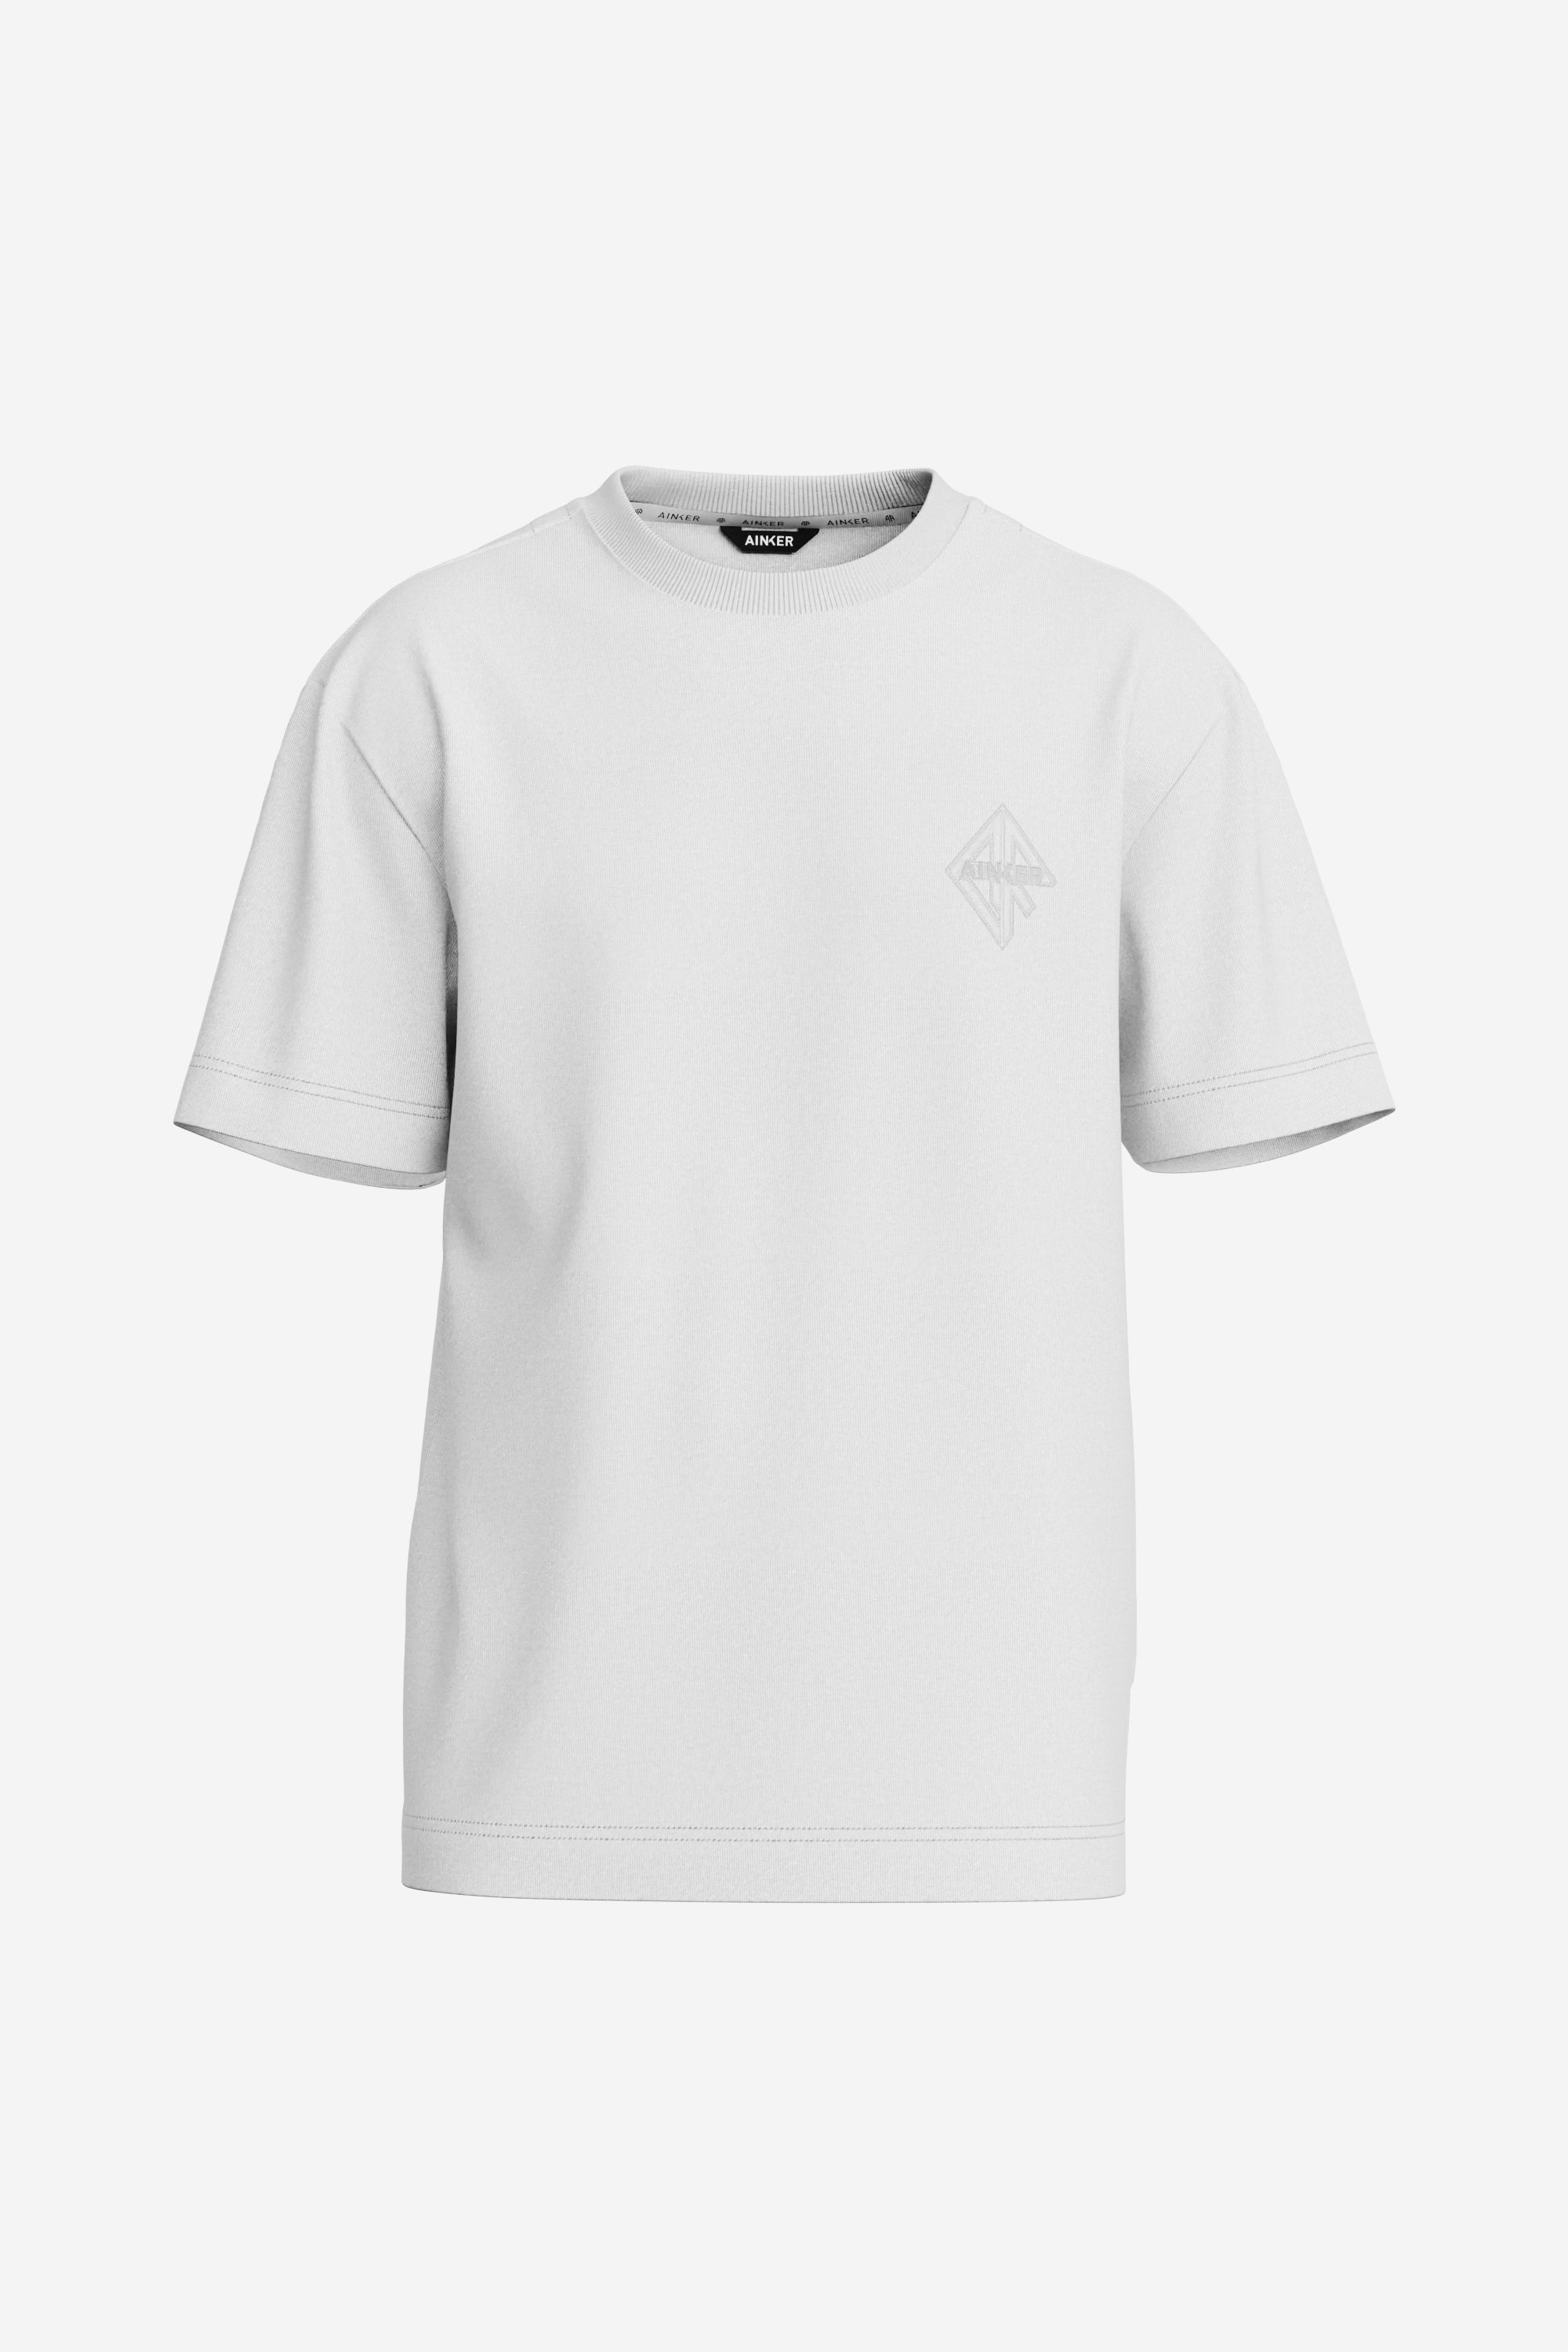 Metal White Mercerize T-Shirt